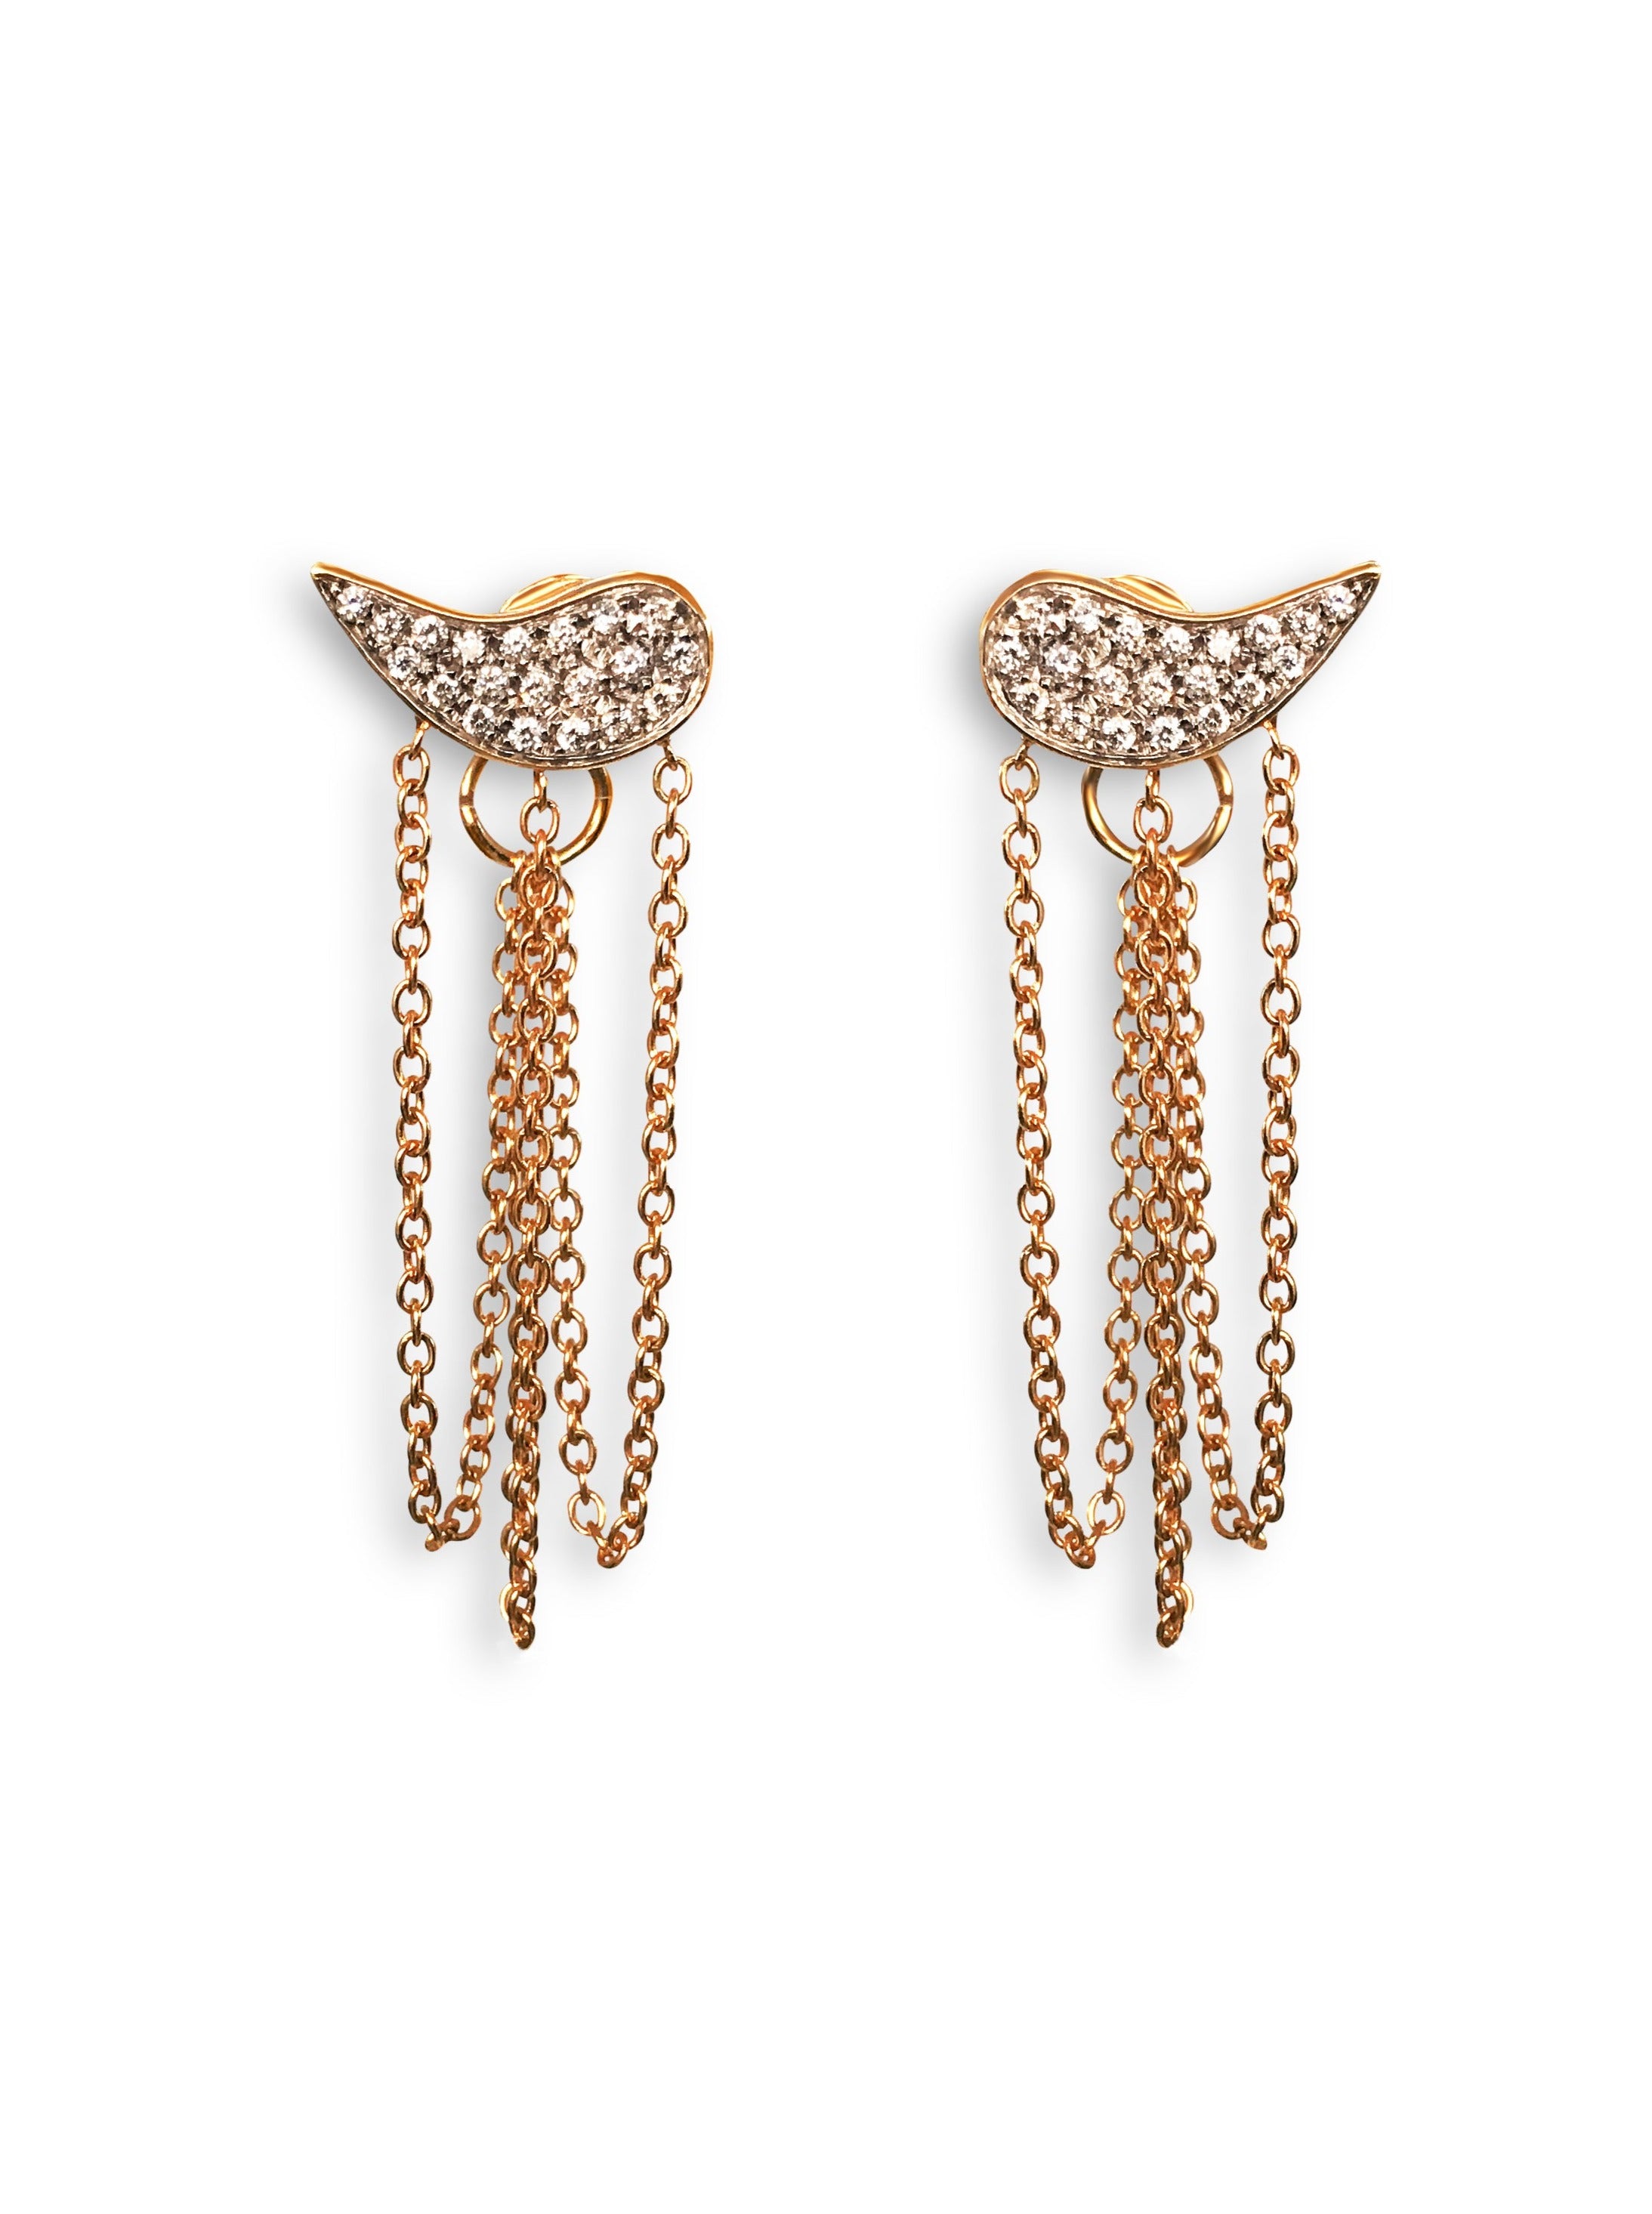 Drip Drop - Earrings in 18 karat gold with diamonds